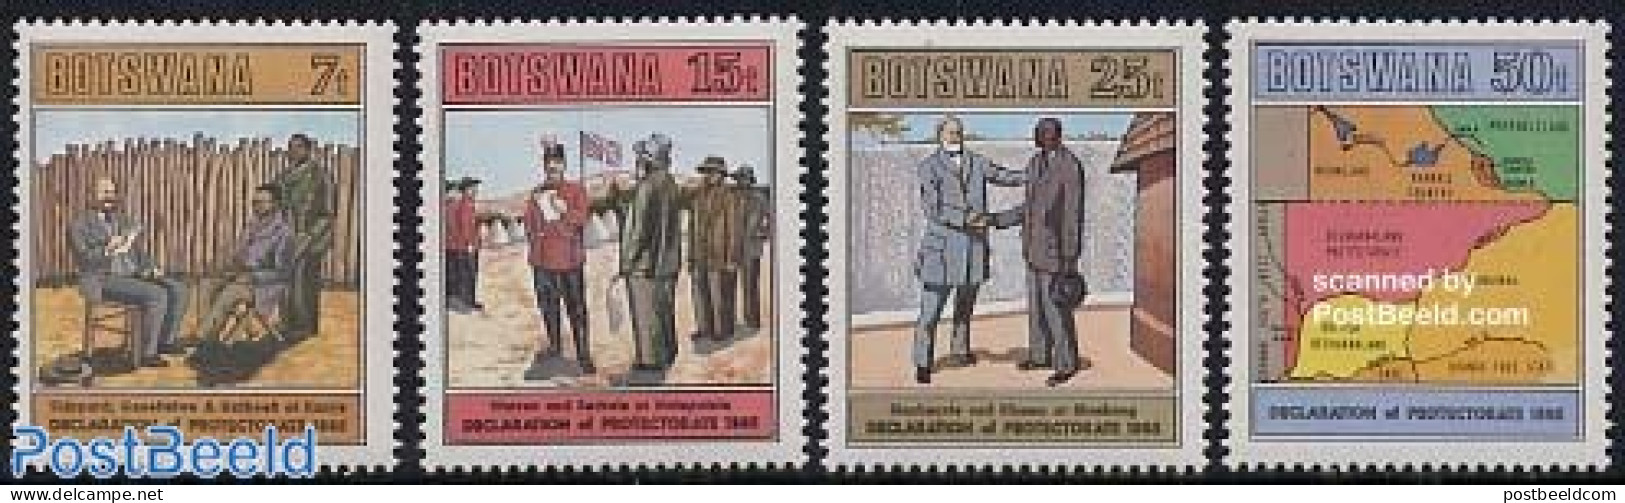 Botswana 1985 Bechuanaland Protectorate 4v, Mint NH, History - Various - History - Maps - Uniforms - Geografia